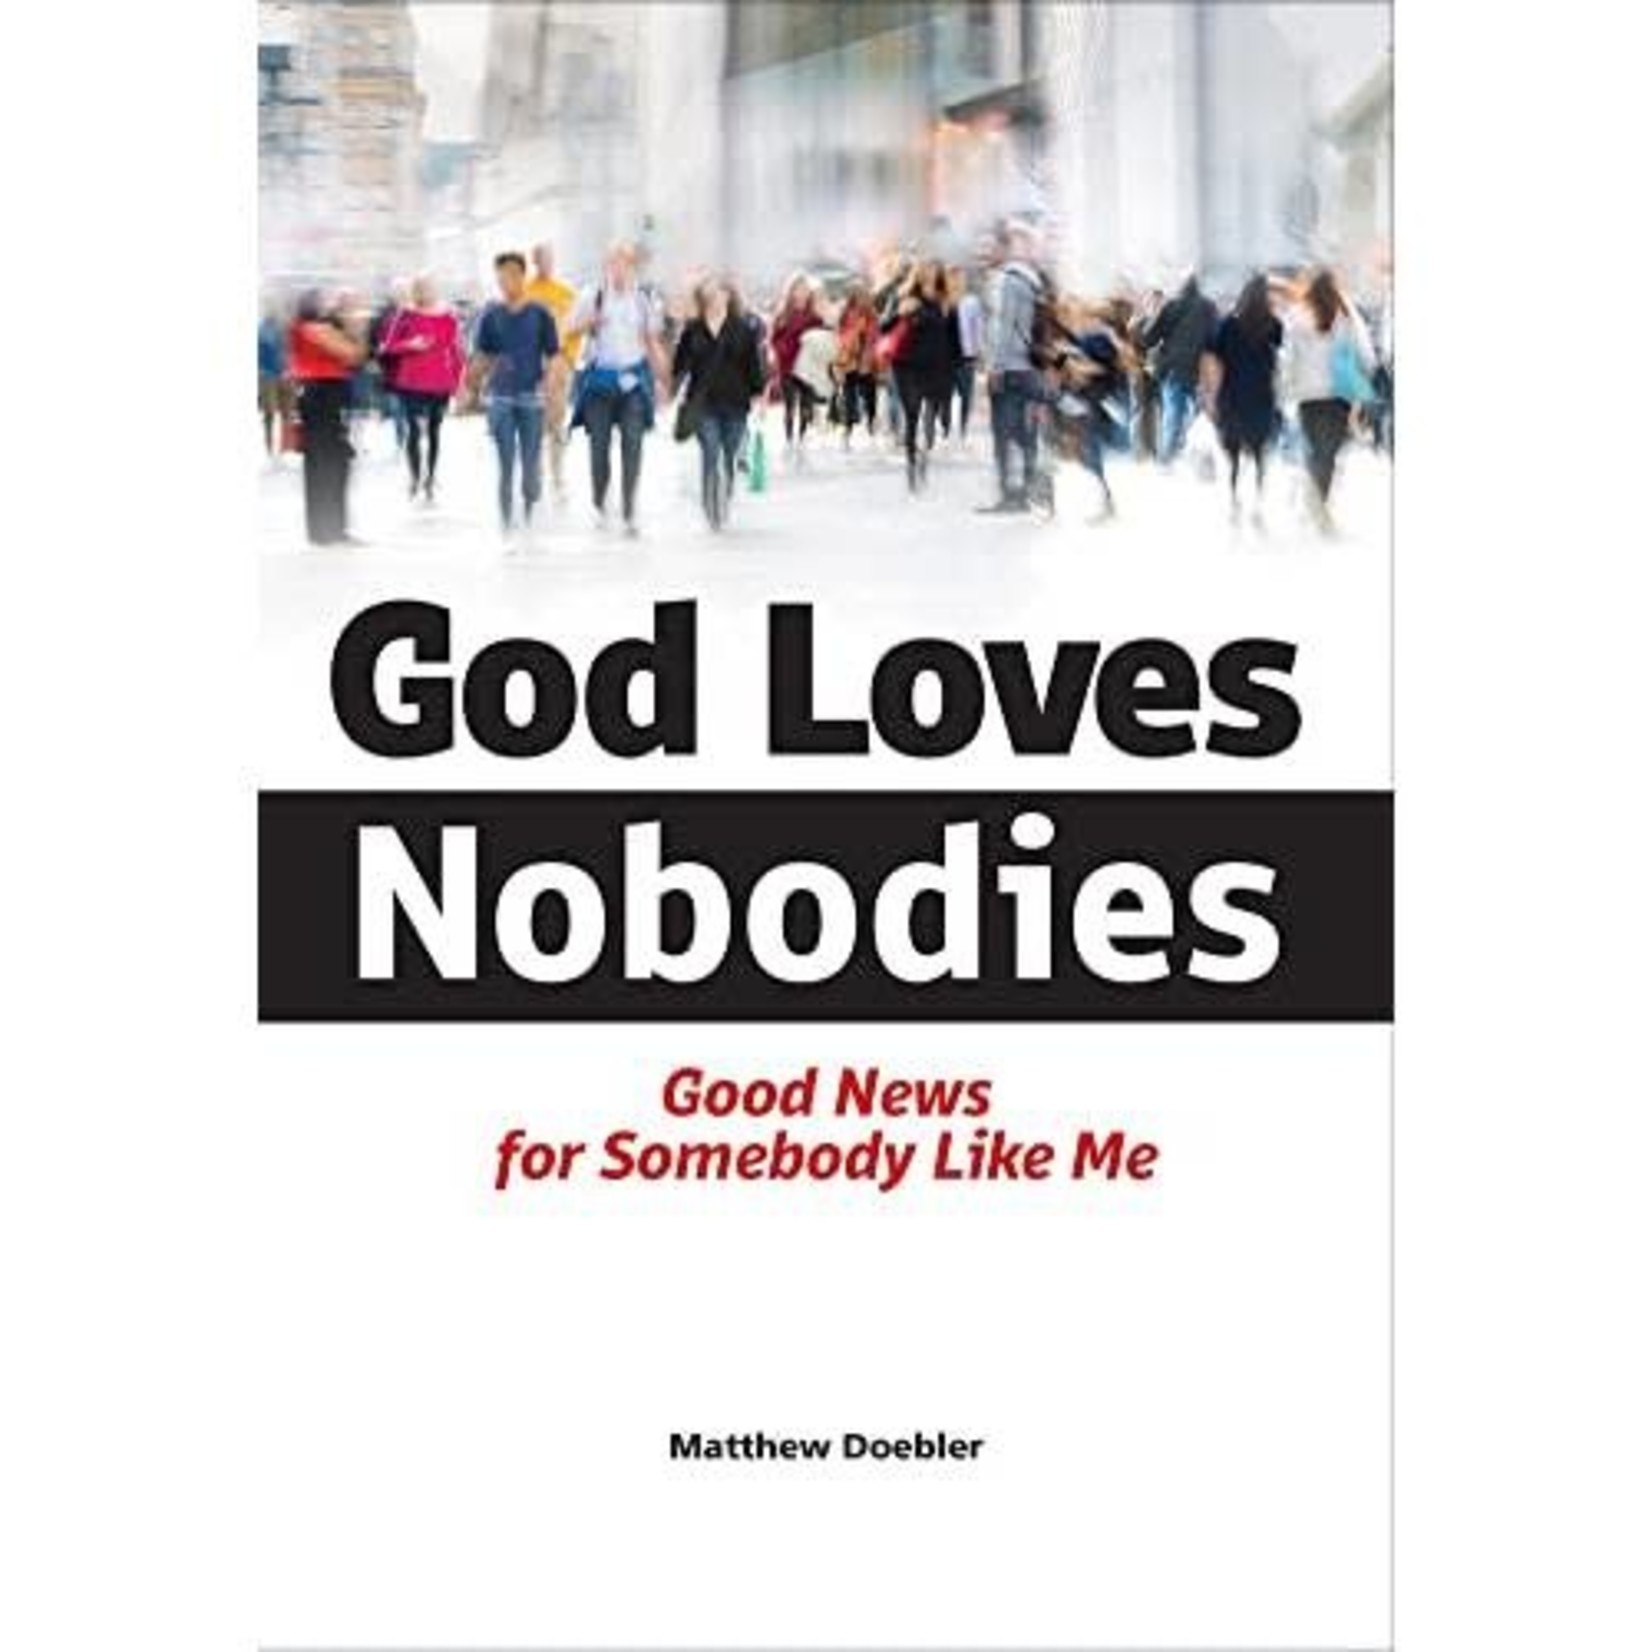 Northwestern Publishing House God Loves Nobodies: Good News for Somebody Like Me